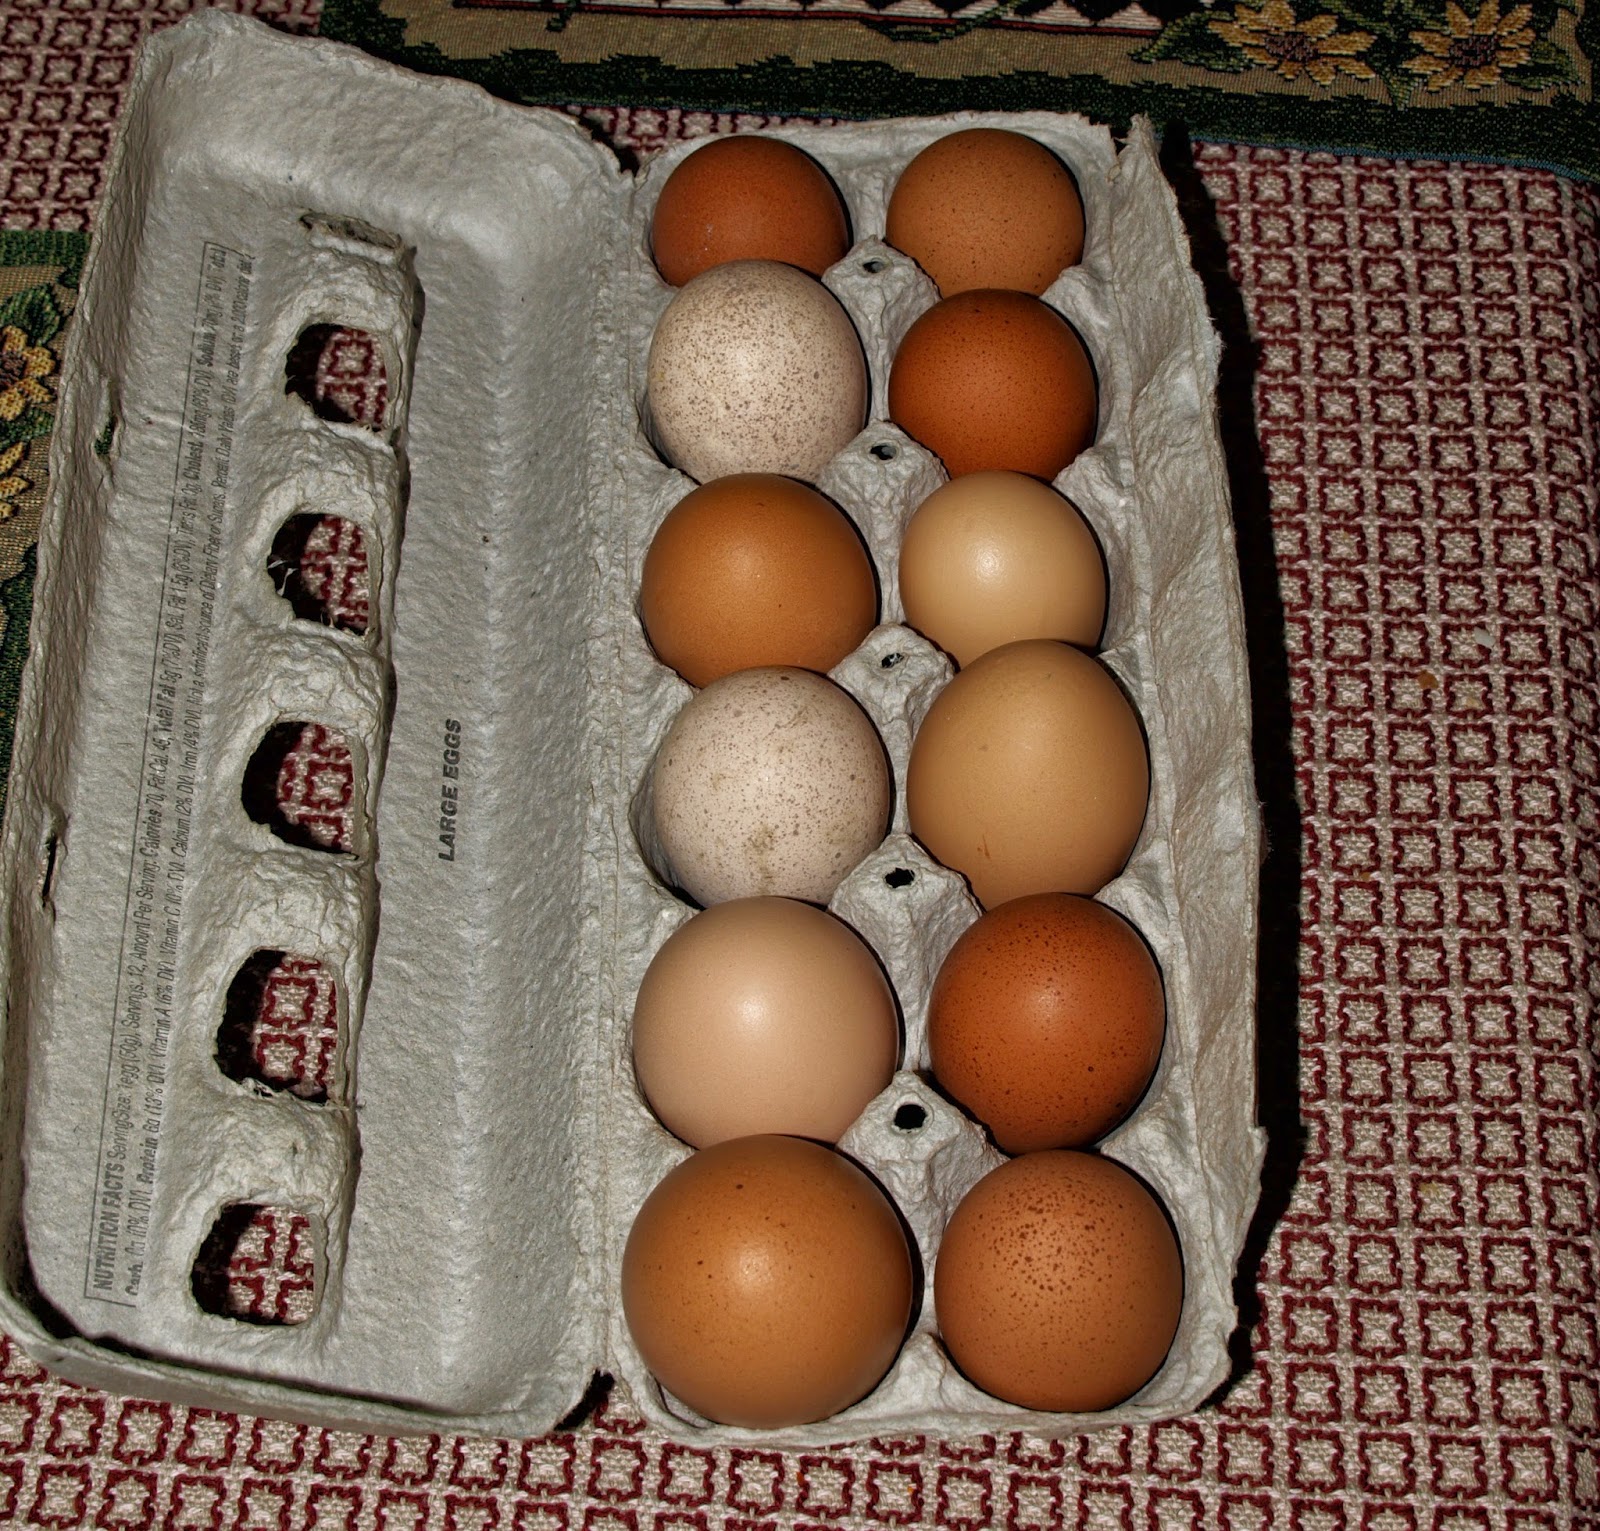 Eggs5March14.jpg